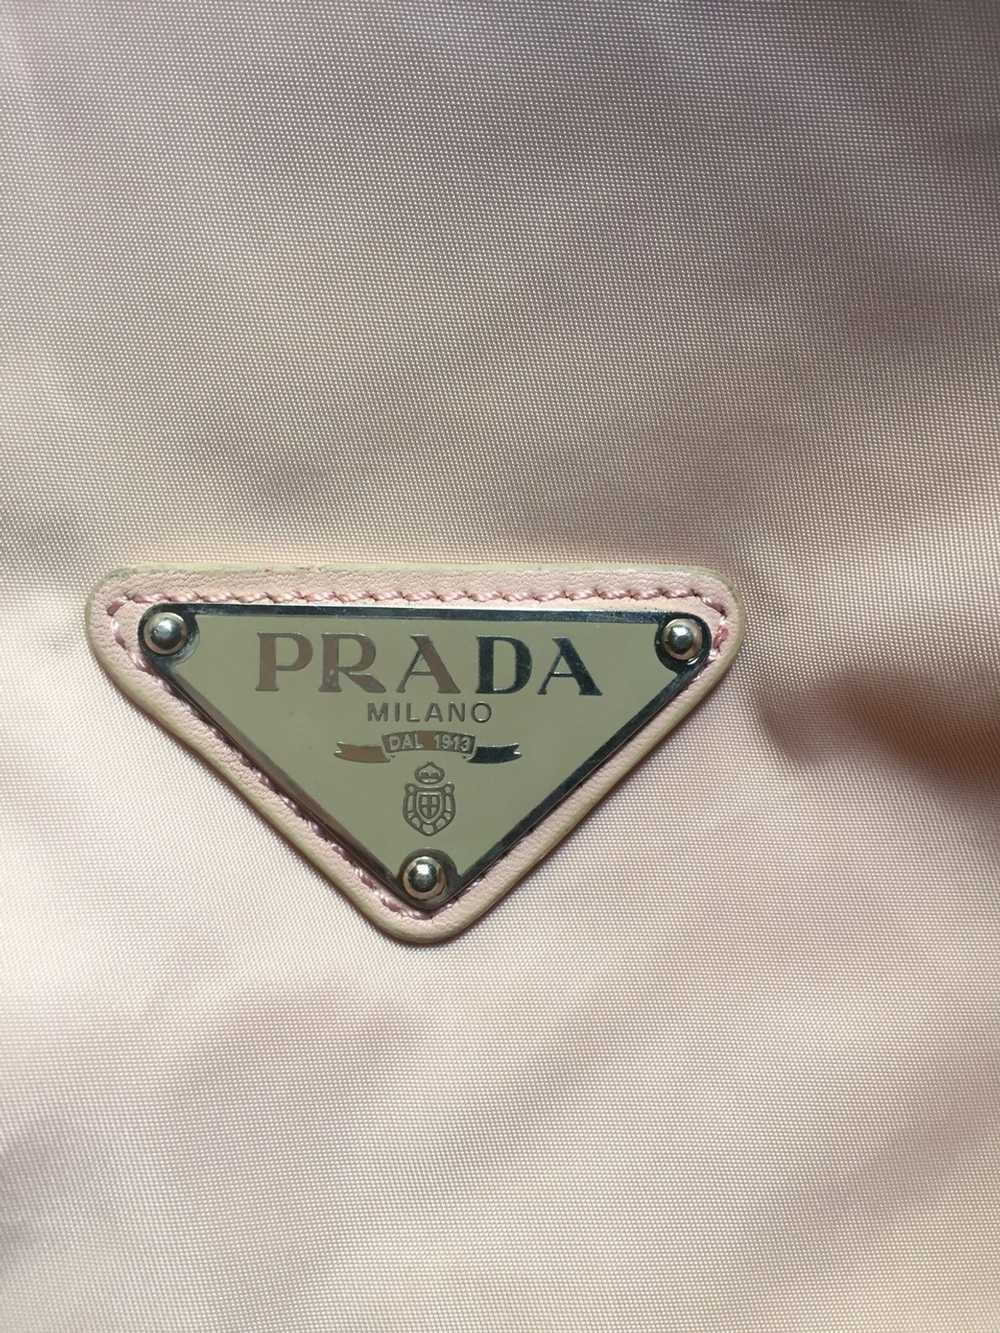 Prada Prada - image 10